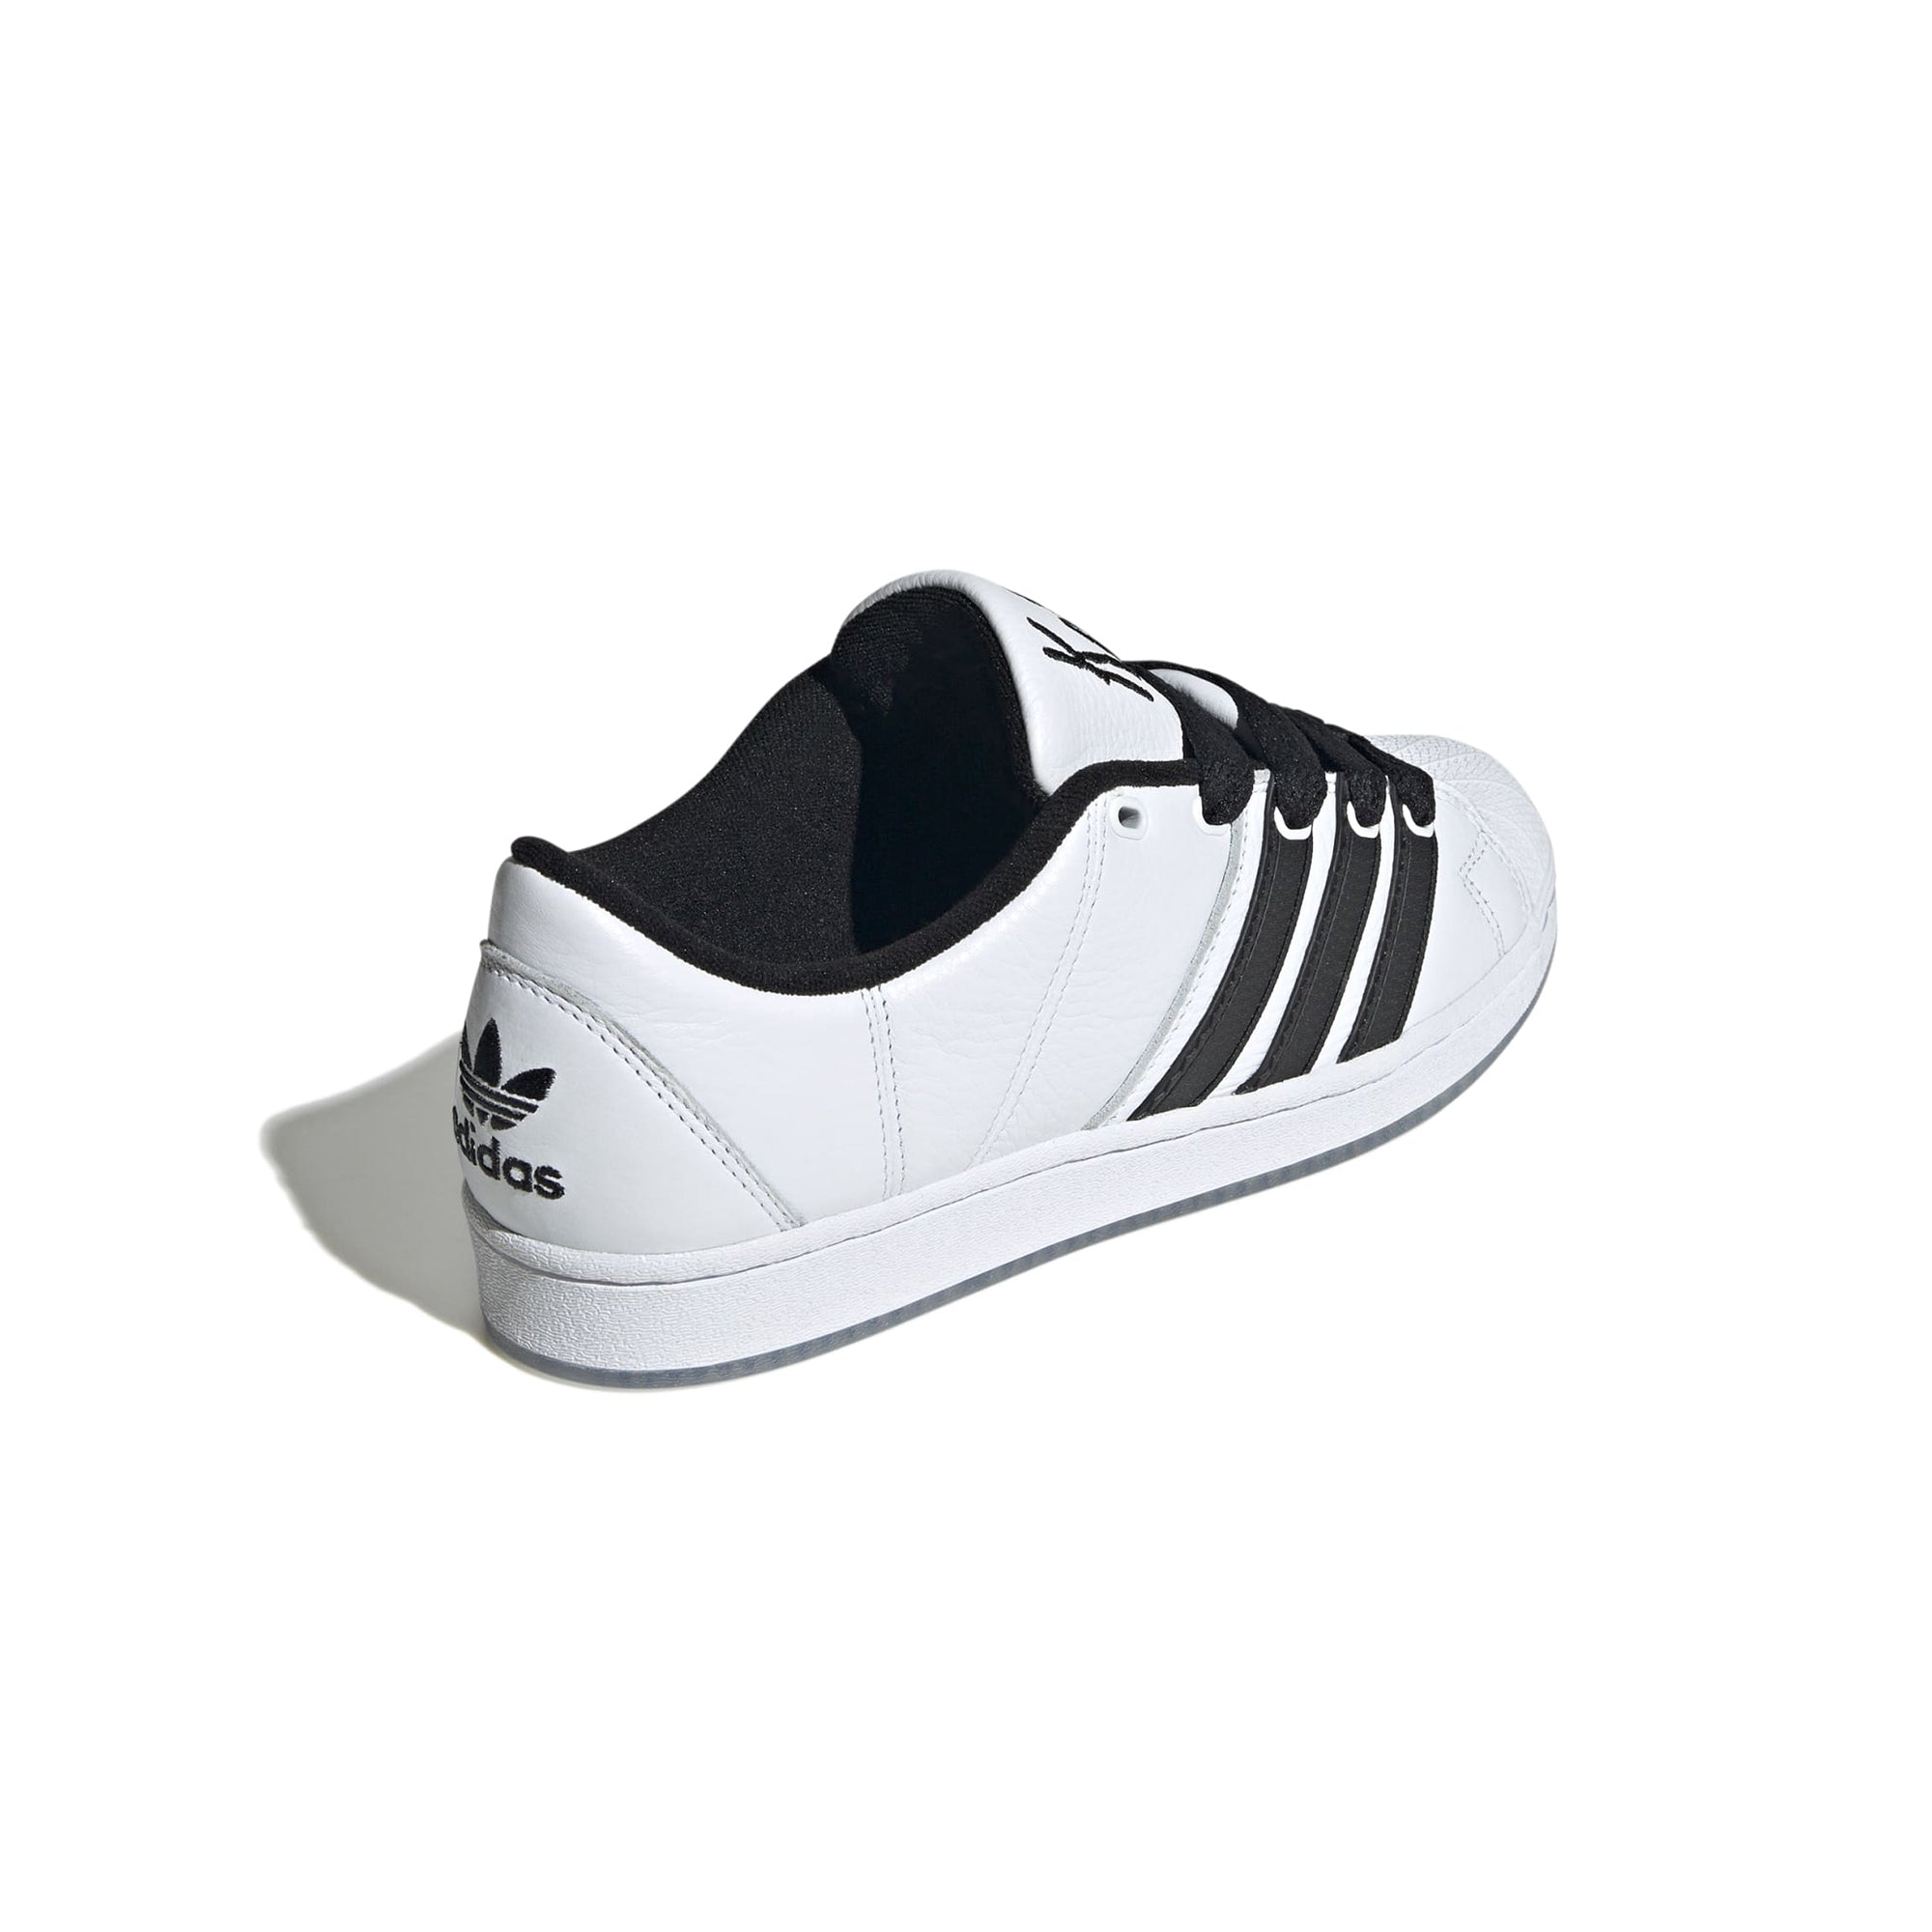 Adidas x Korn Supermodified Shoes - 5